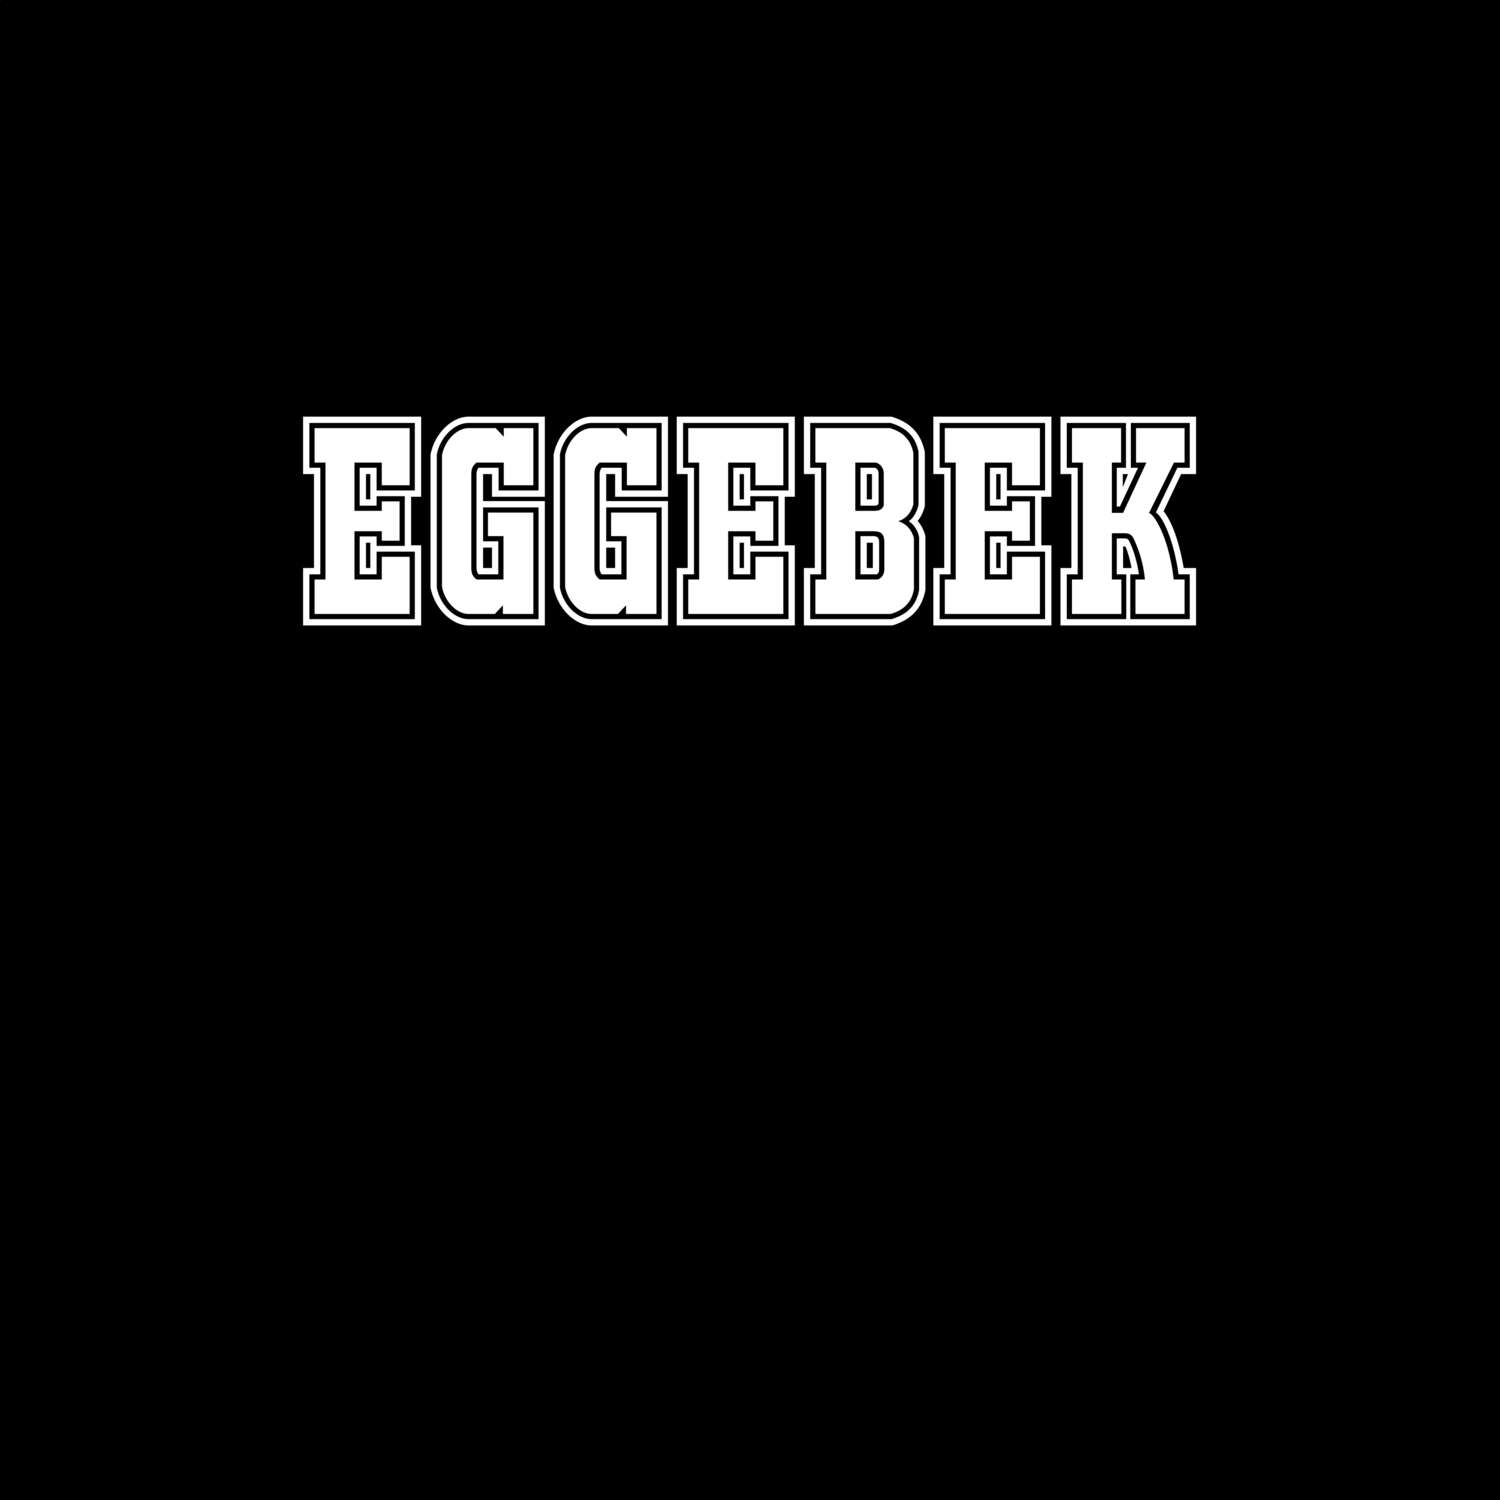 Eggebek T-Shirt »Classic«